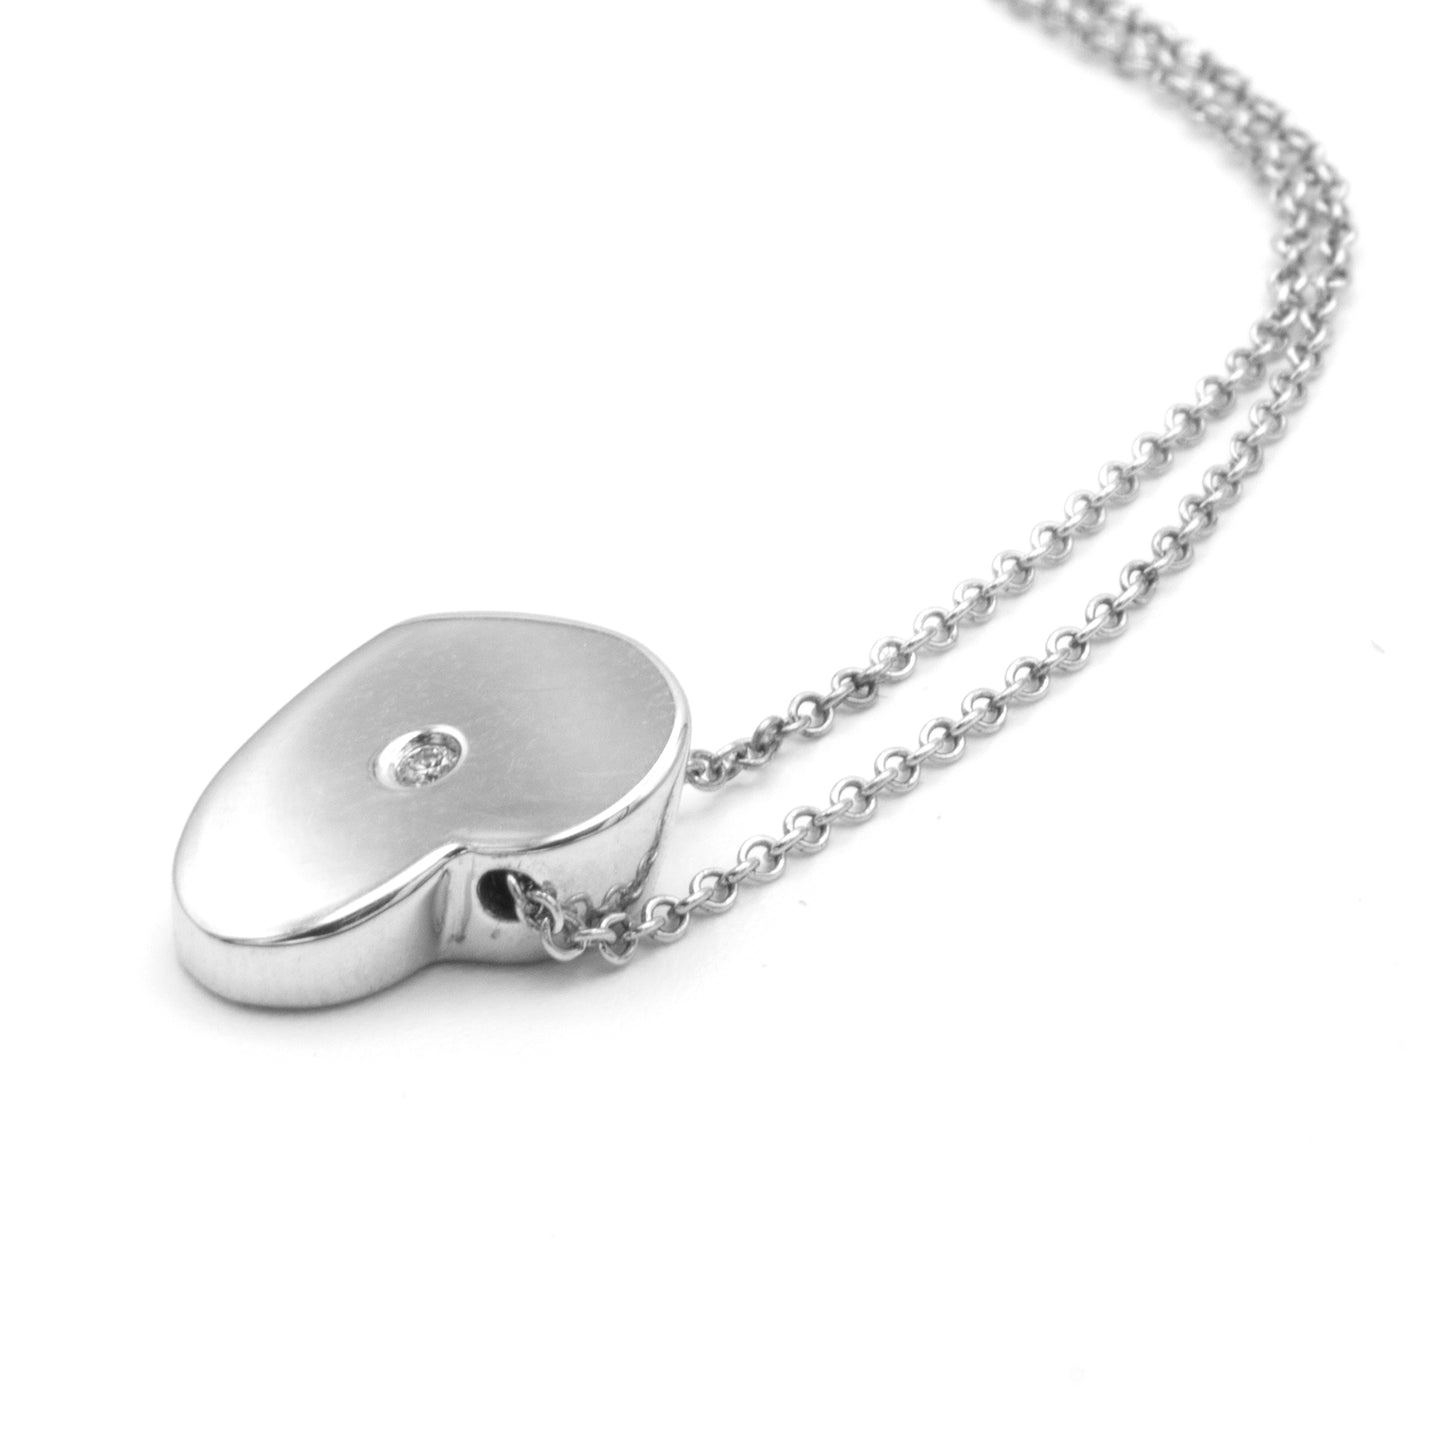 Tiffany & Co. Modern Heart necklace